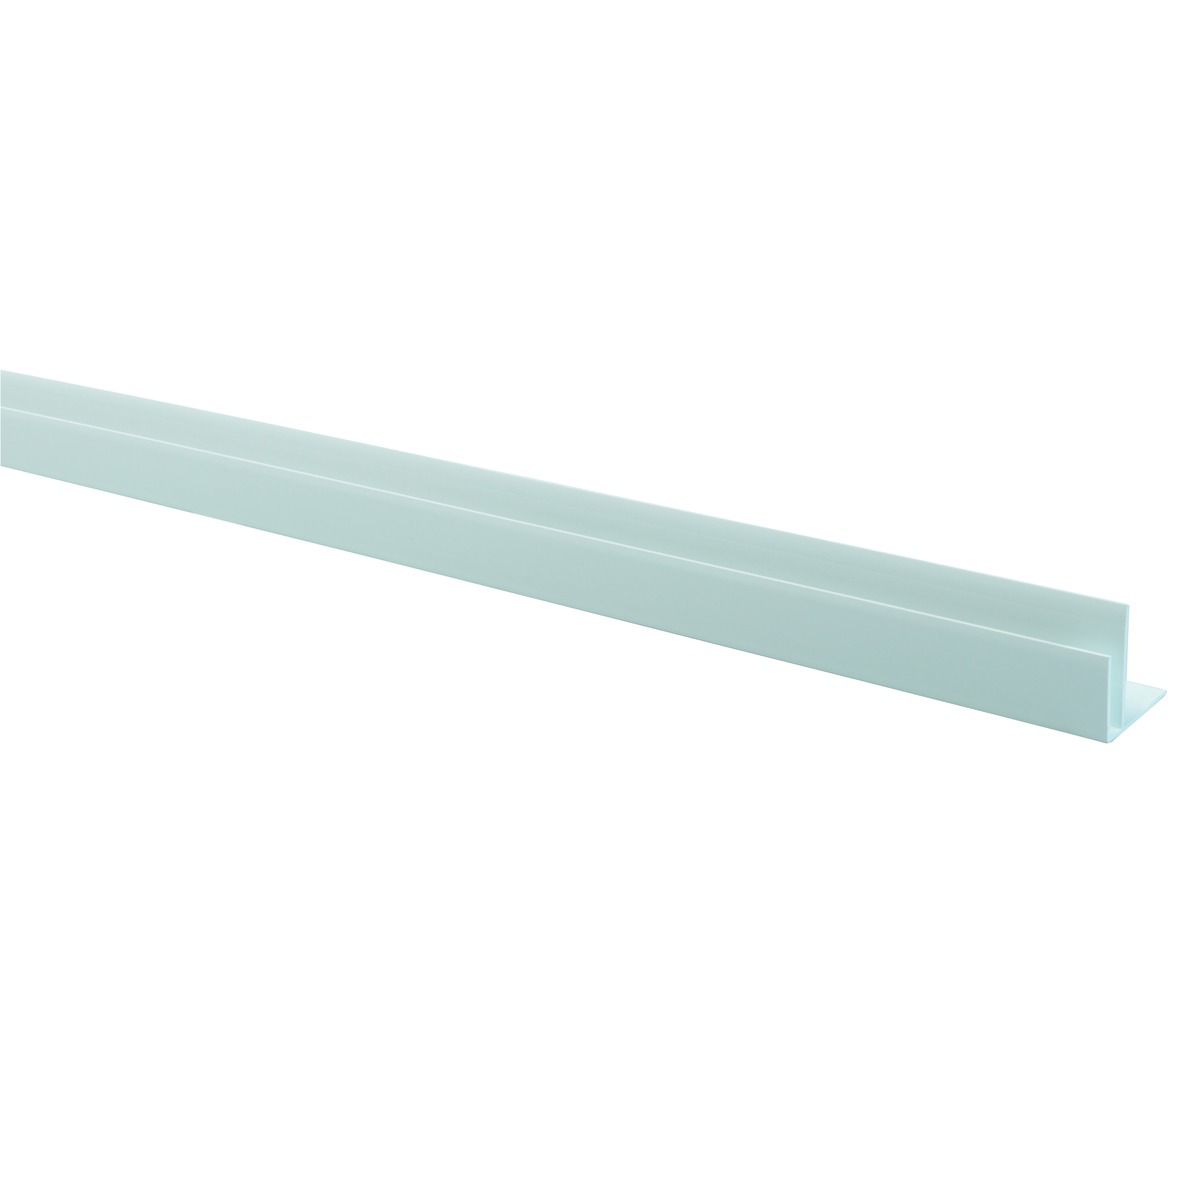 Image of Wickes PVCu External Bottom Edge Cladding Trim - White 2.5m